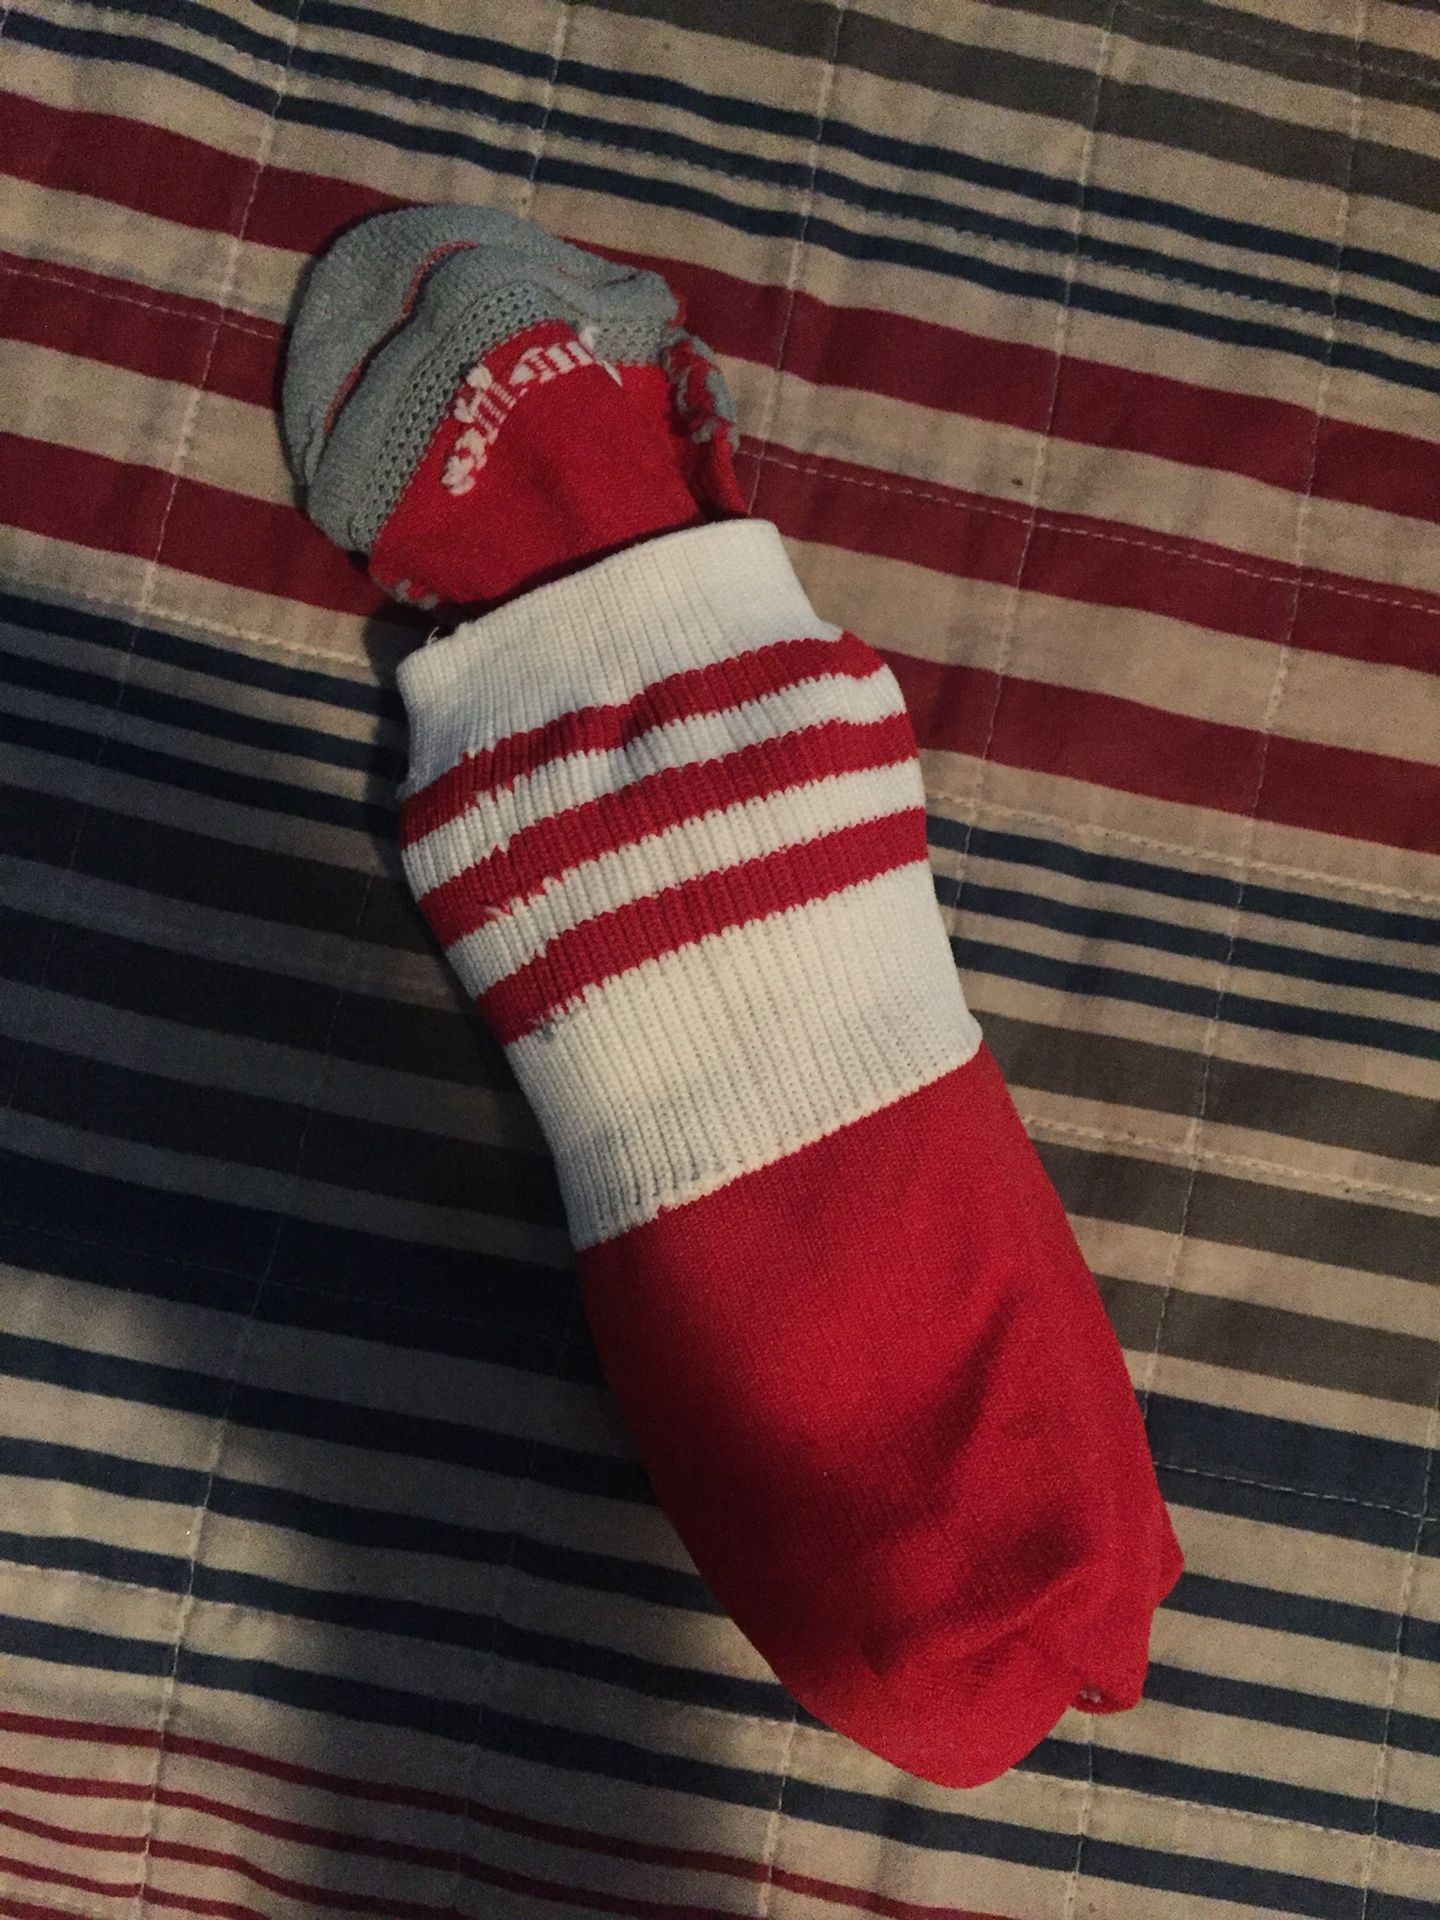 Red adidas socks